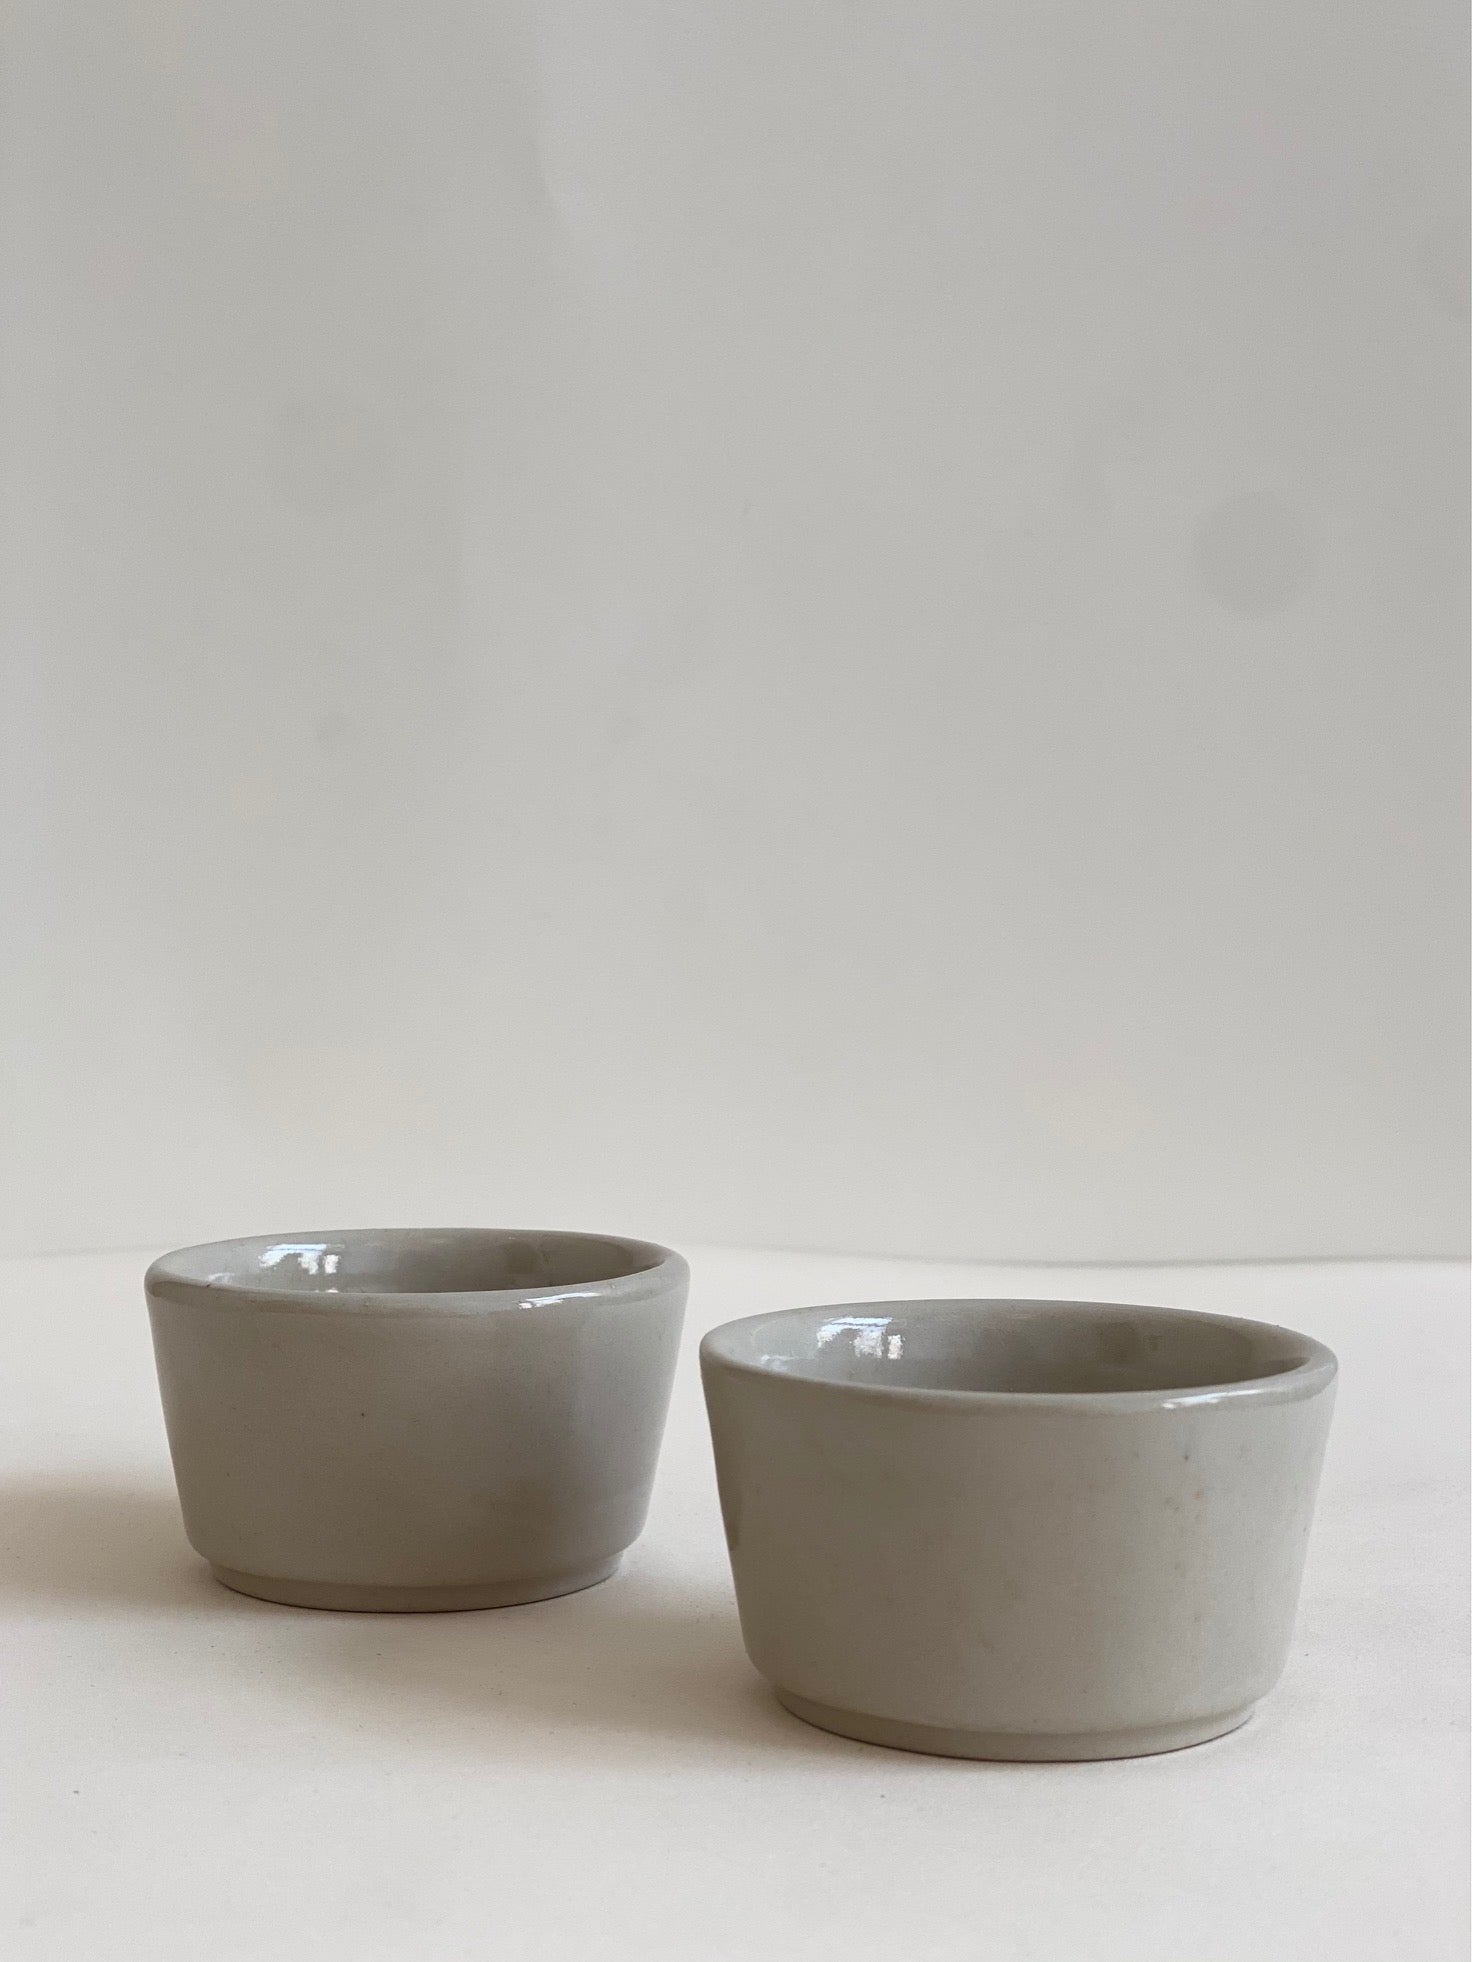 Small ceramic bowls